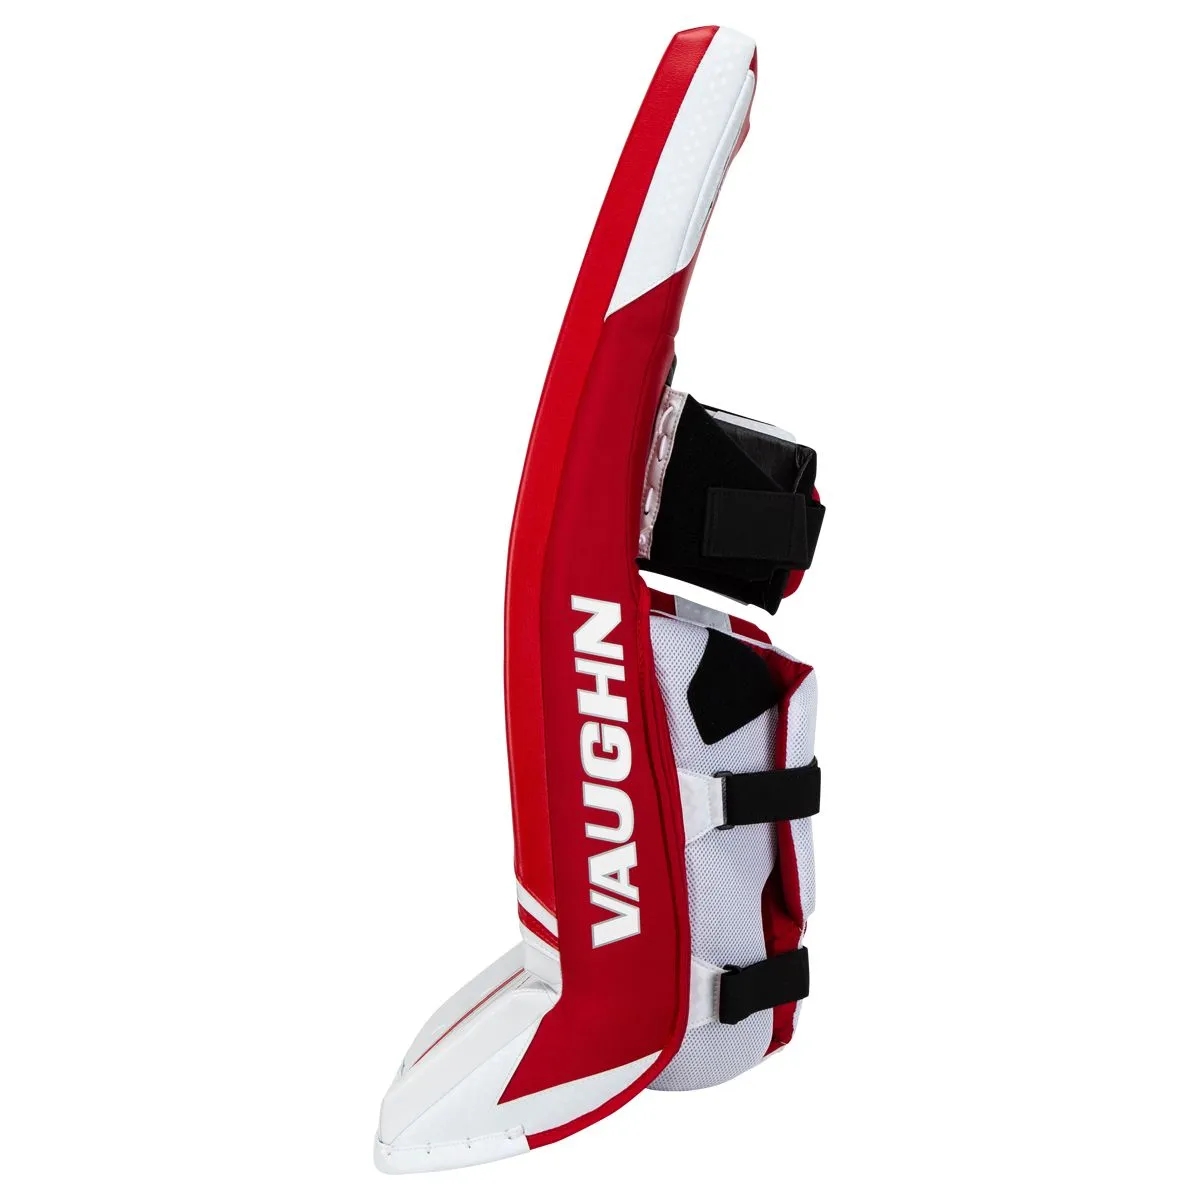 Vaughn Ventus SLR3 Pro Sr. Goalie Leg Padsproduct zoom image #2